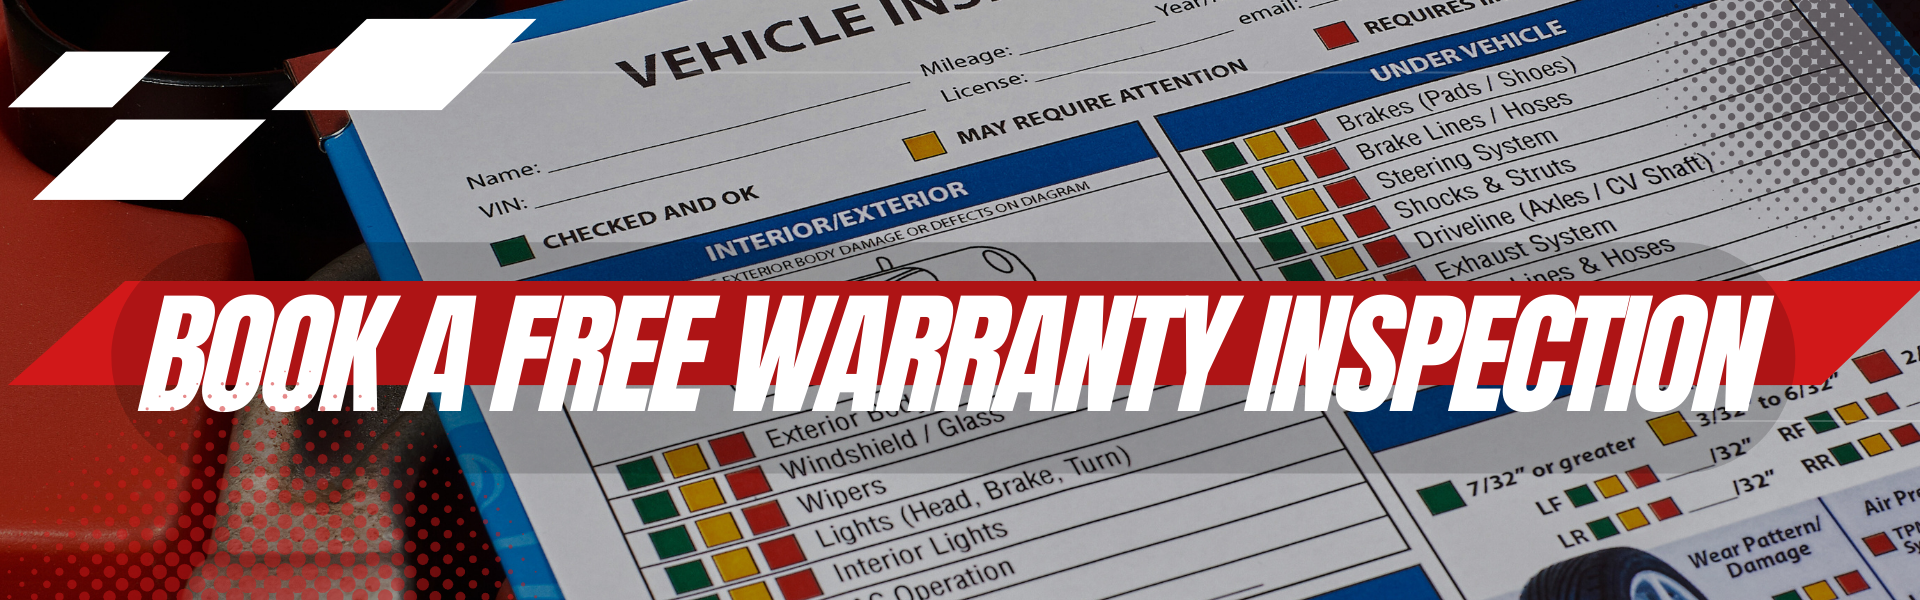 Book a Free Warranty Inspection